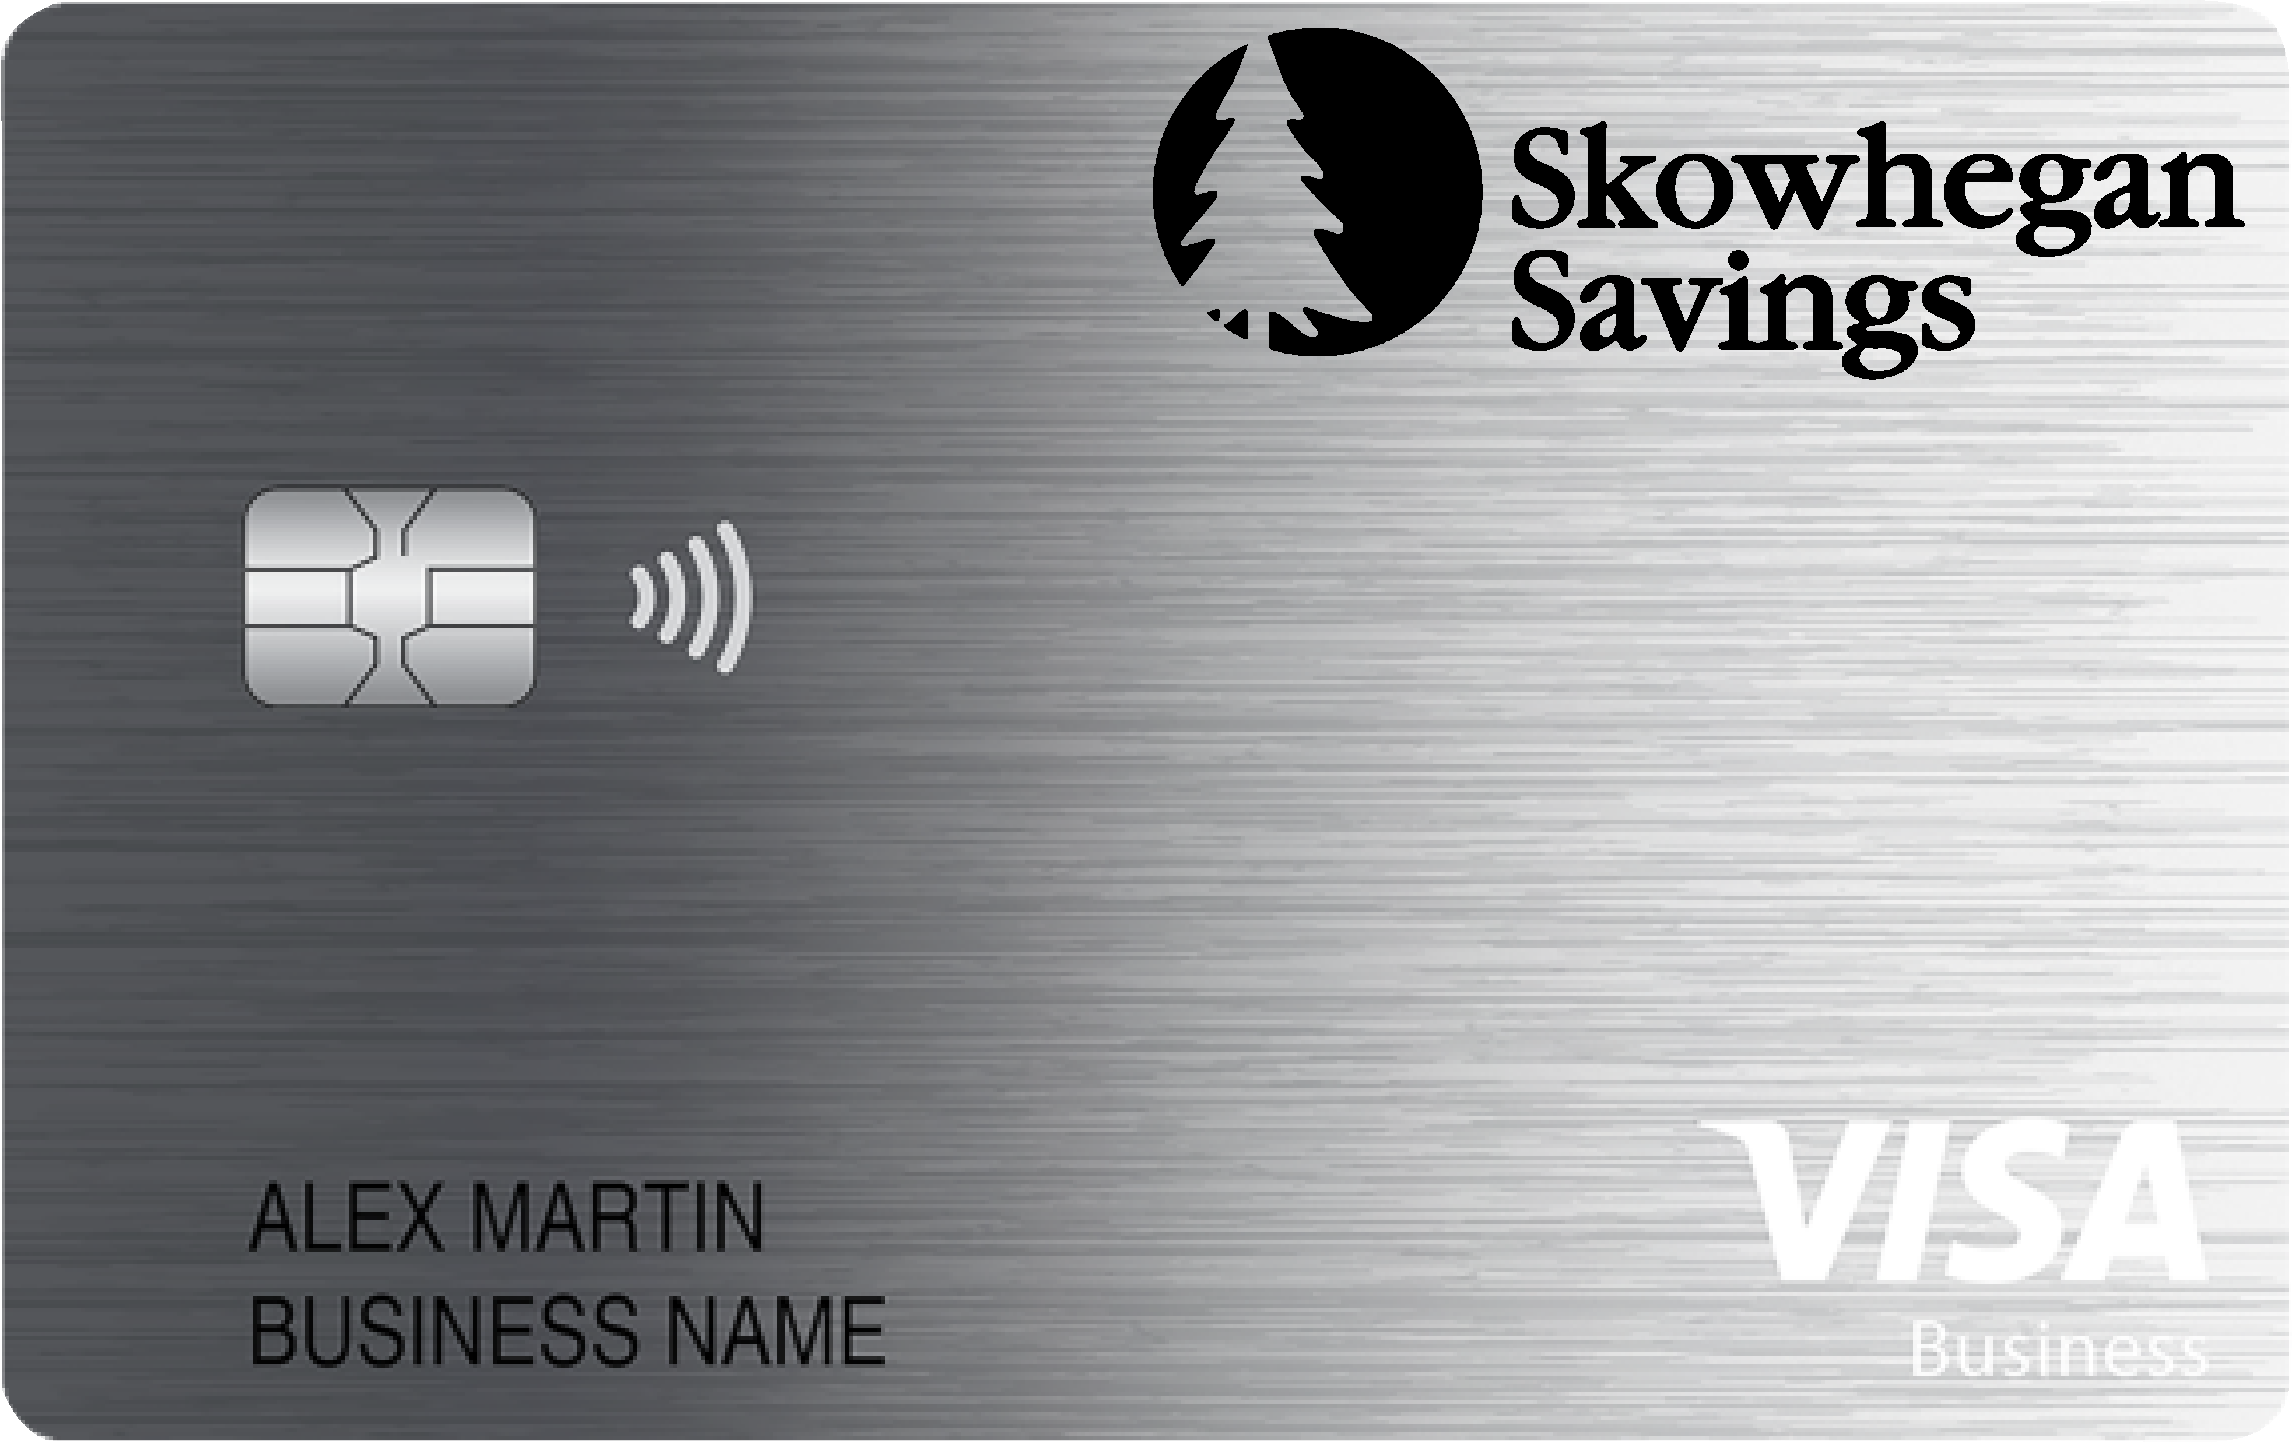 Skowhegan Savings Bank Business Cash Preferred Card